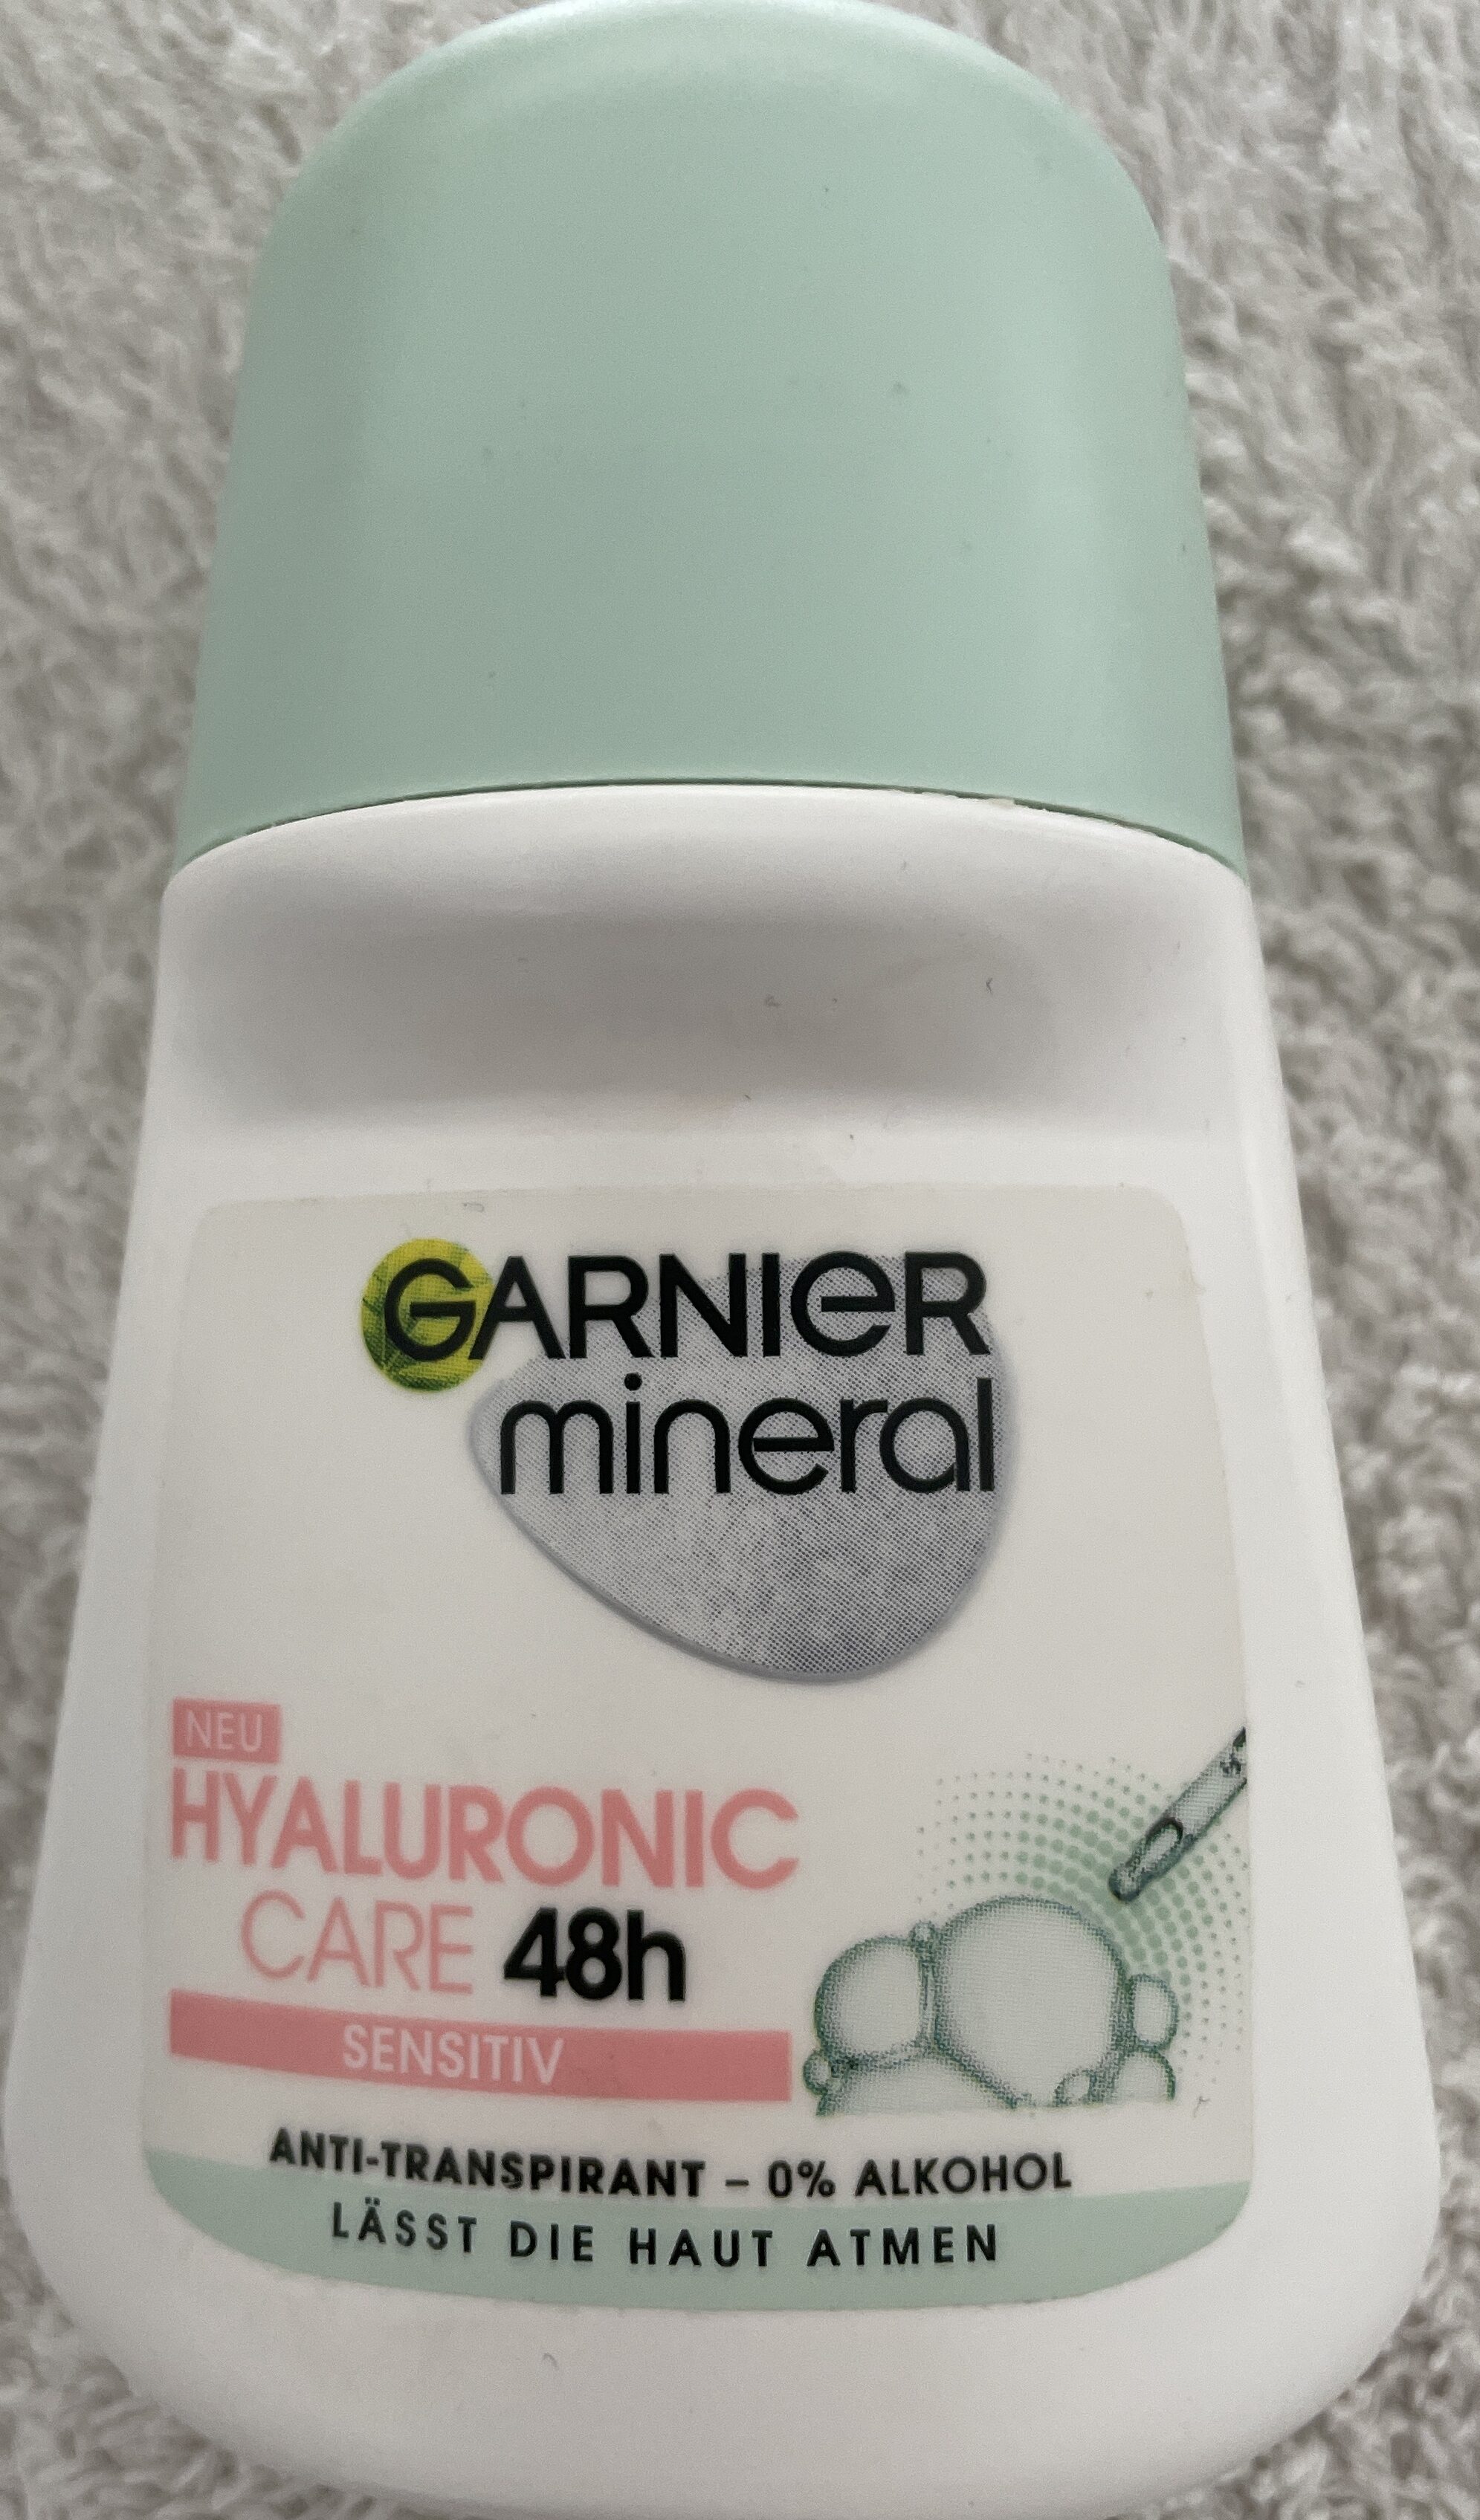 Hyaluronic Care 48h Sensitiv - Produkt - de